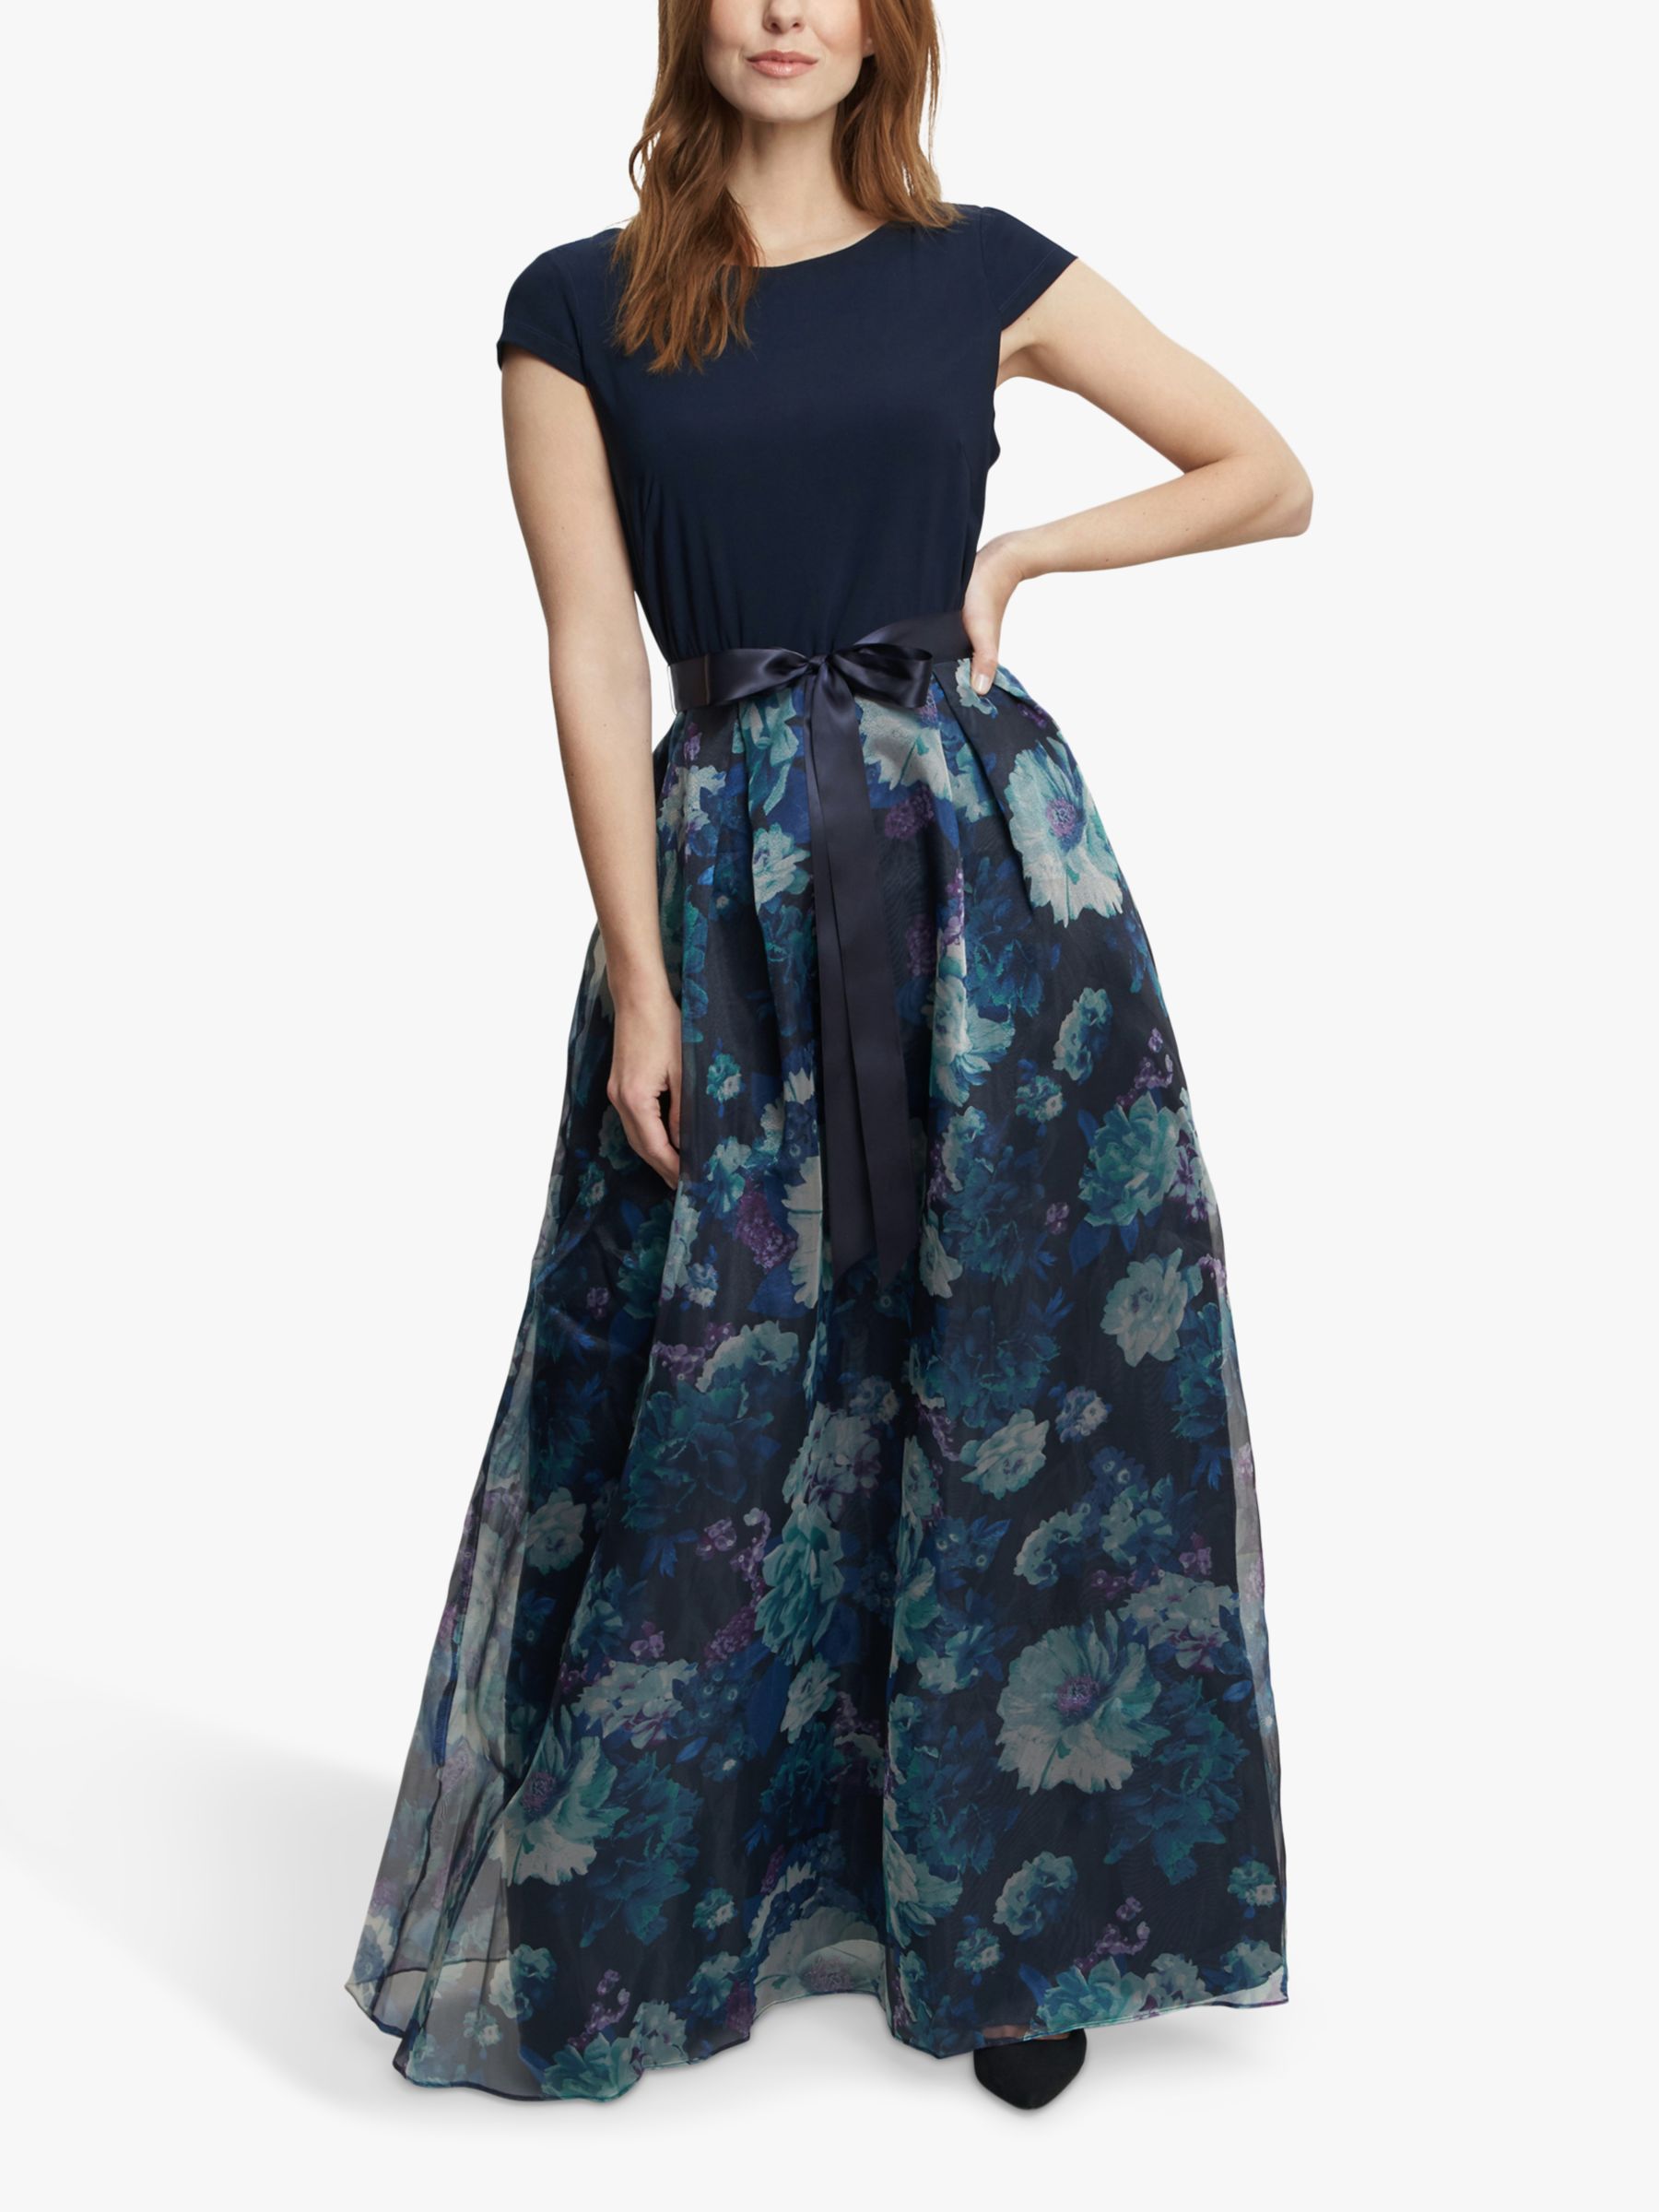 Gina Bacconi Avree Floral Print Maxi Gown, Navy/Multi, 14